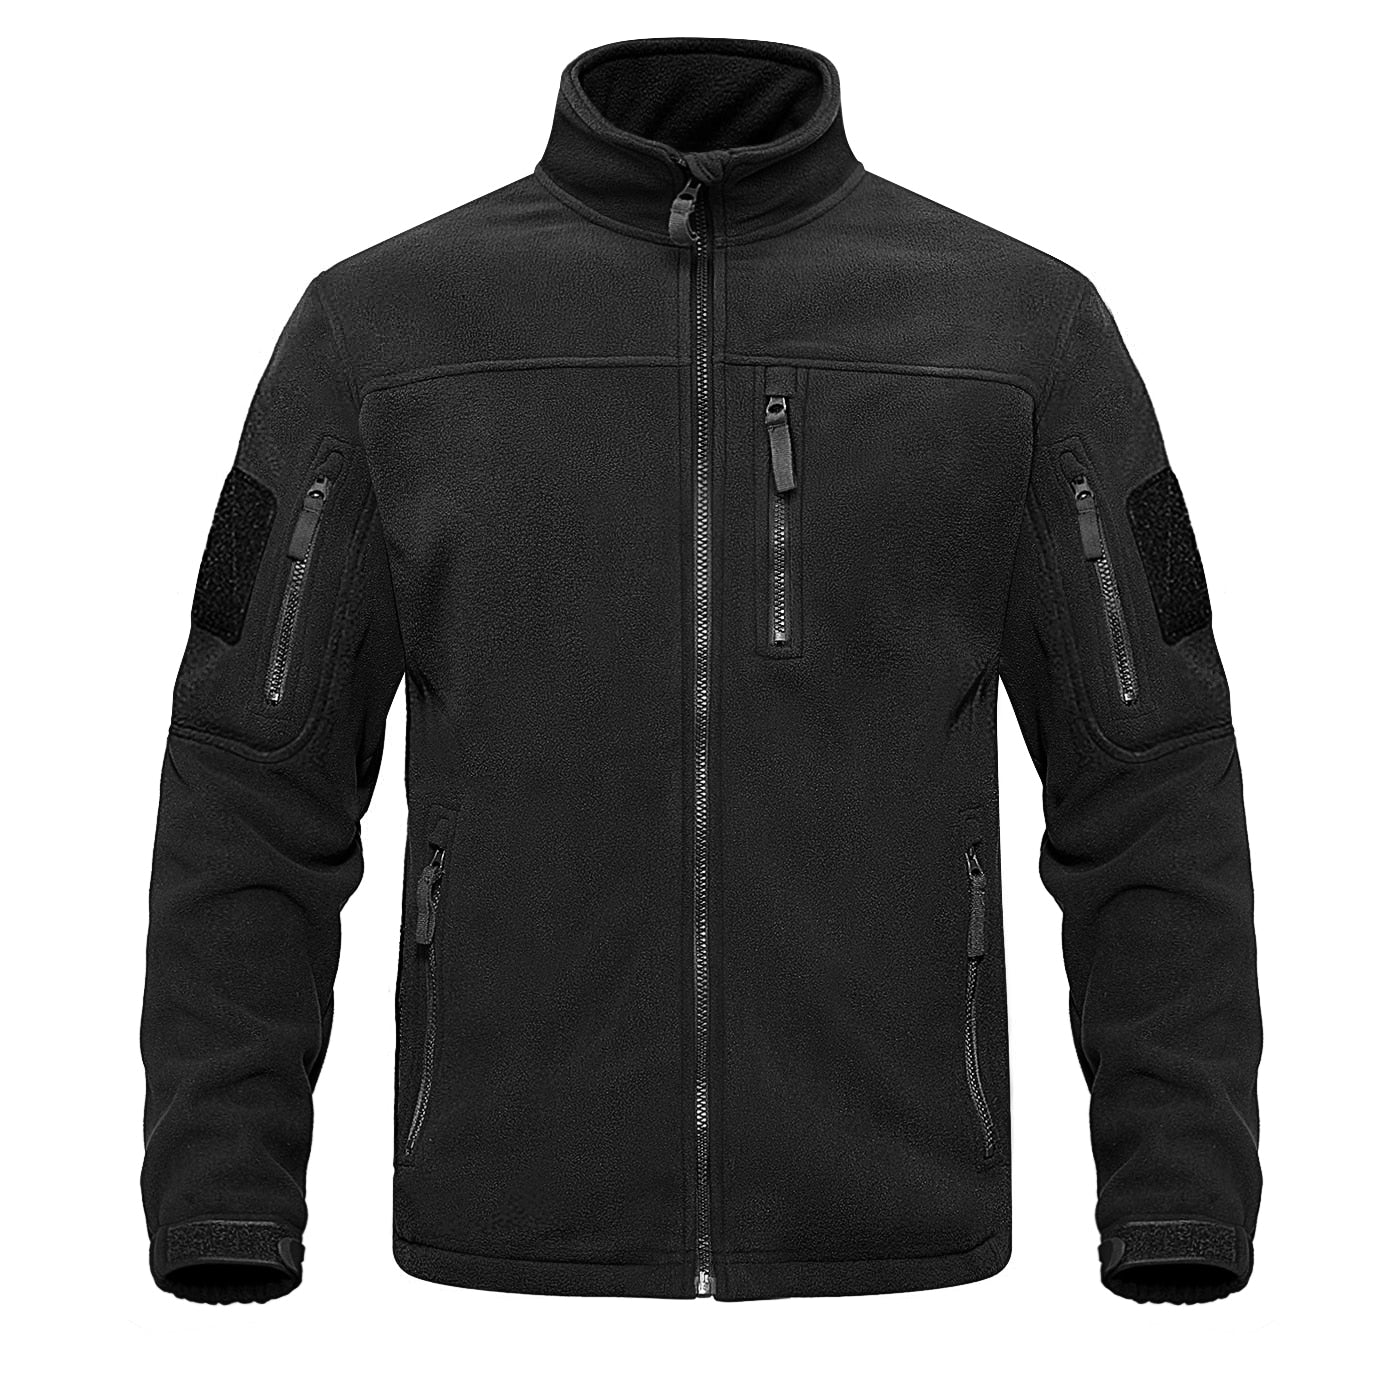 black fleece jacket